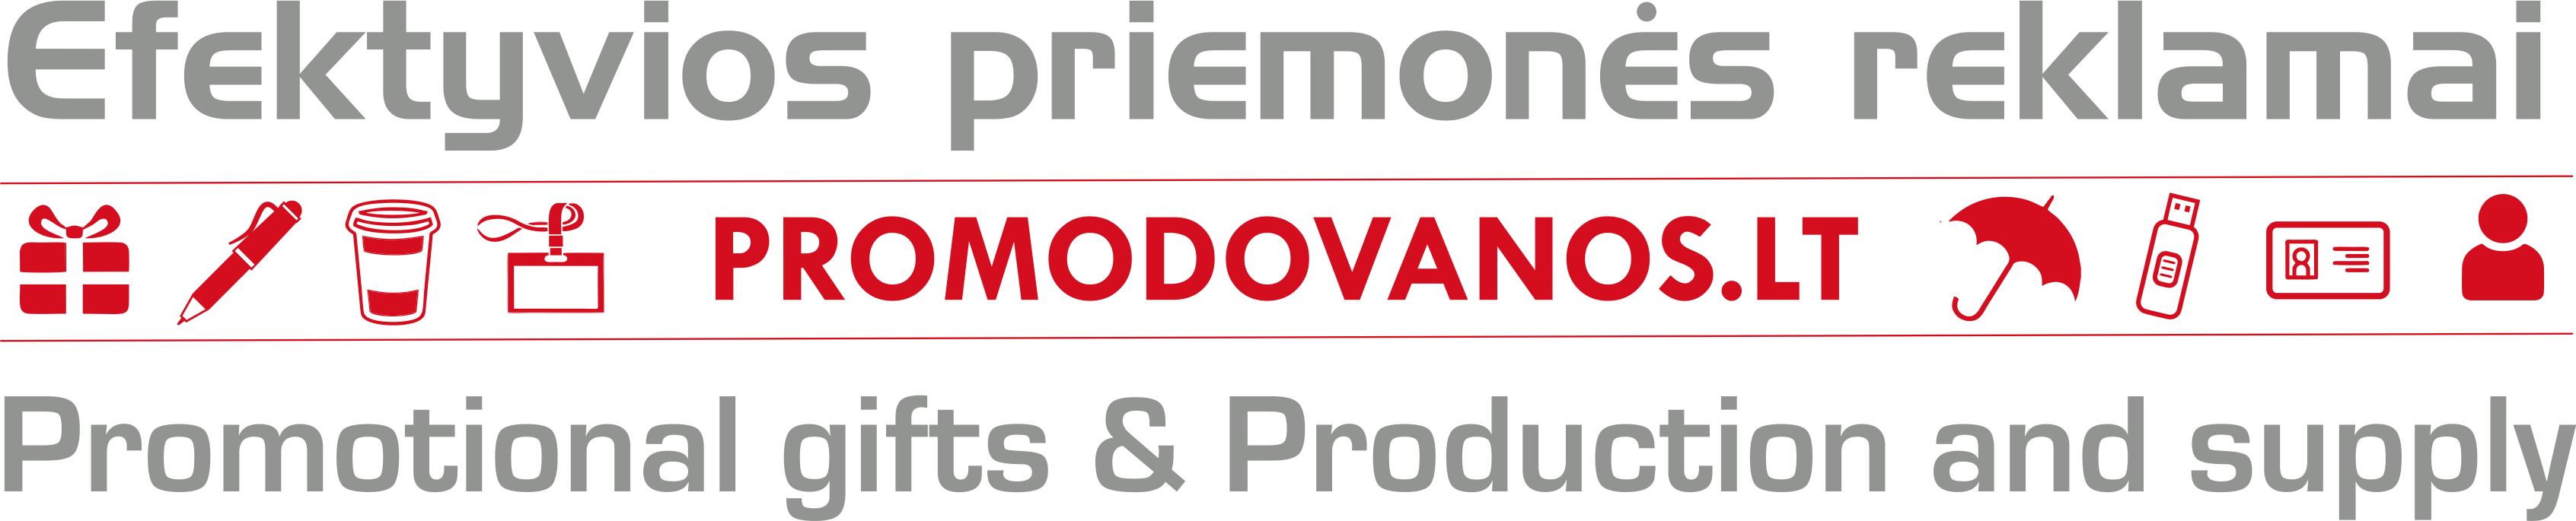 PromoDovanos